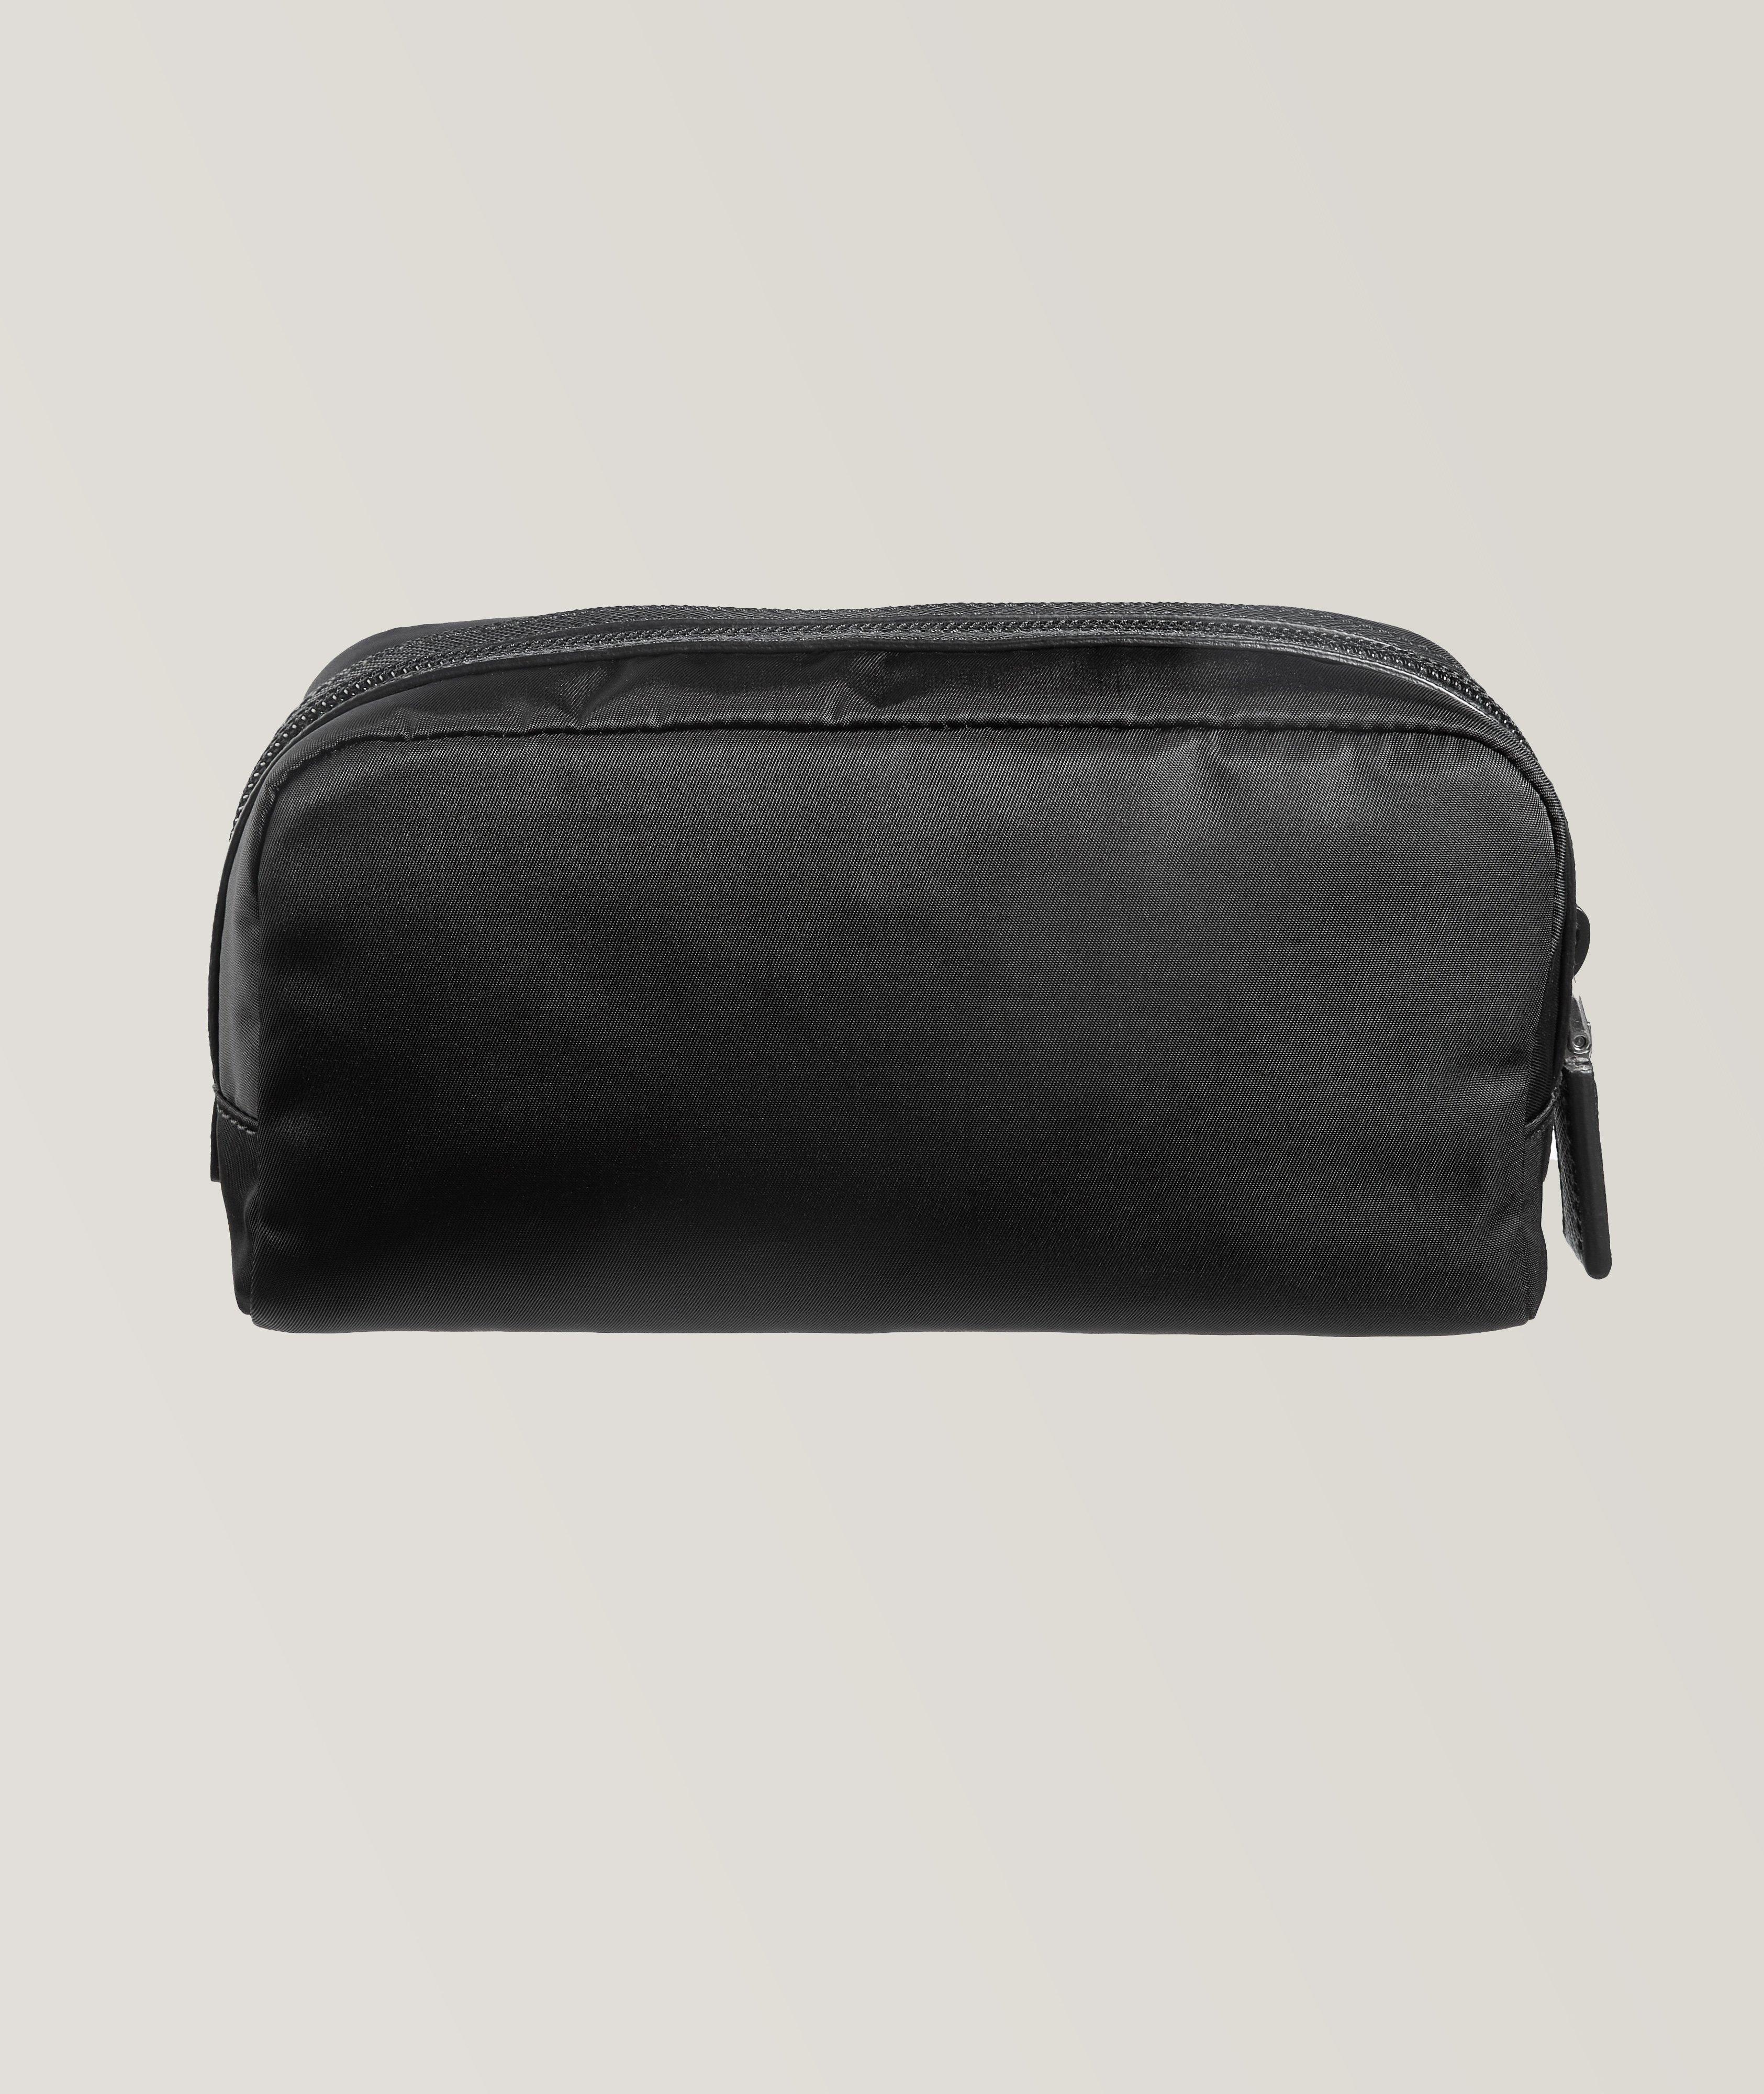 Re-Nylon & Saffiano Leather Toiletry Bag image 1